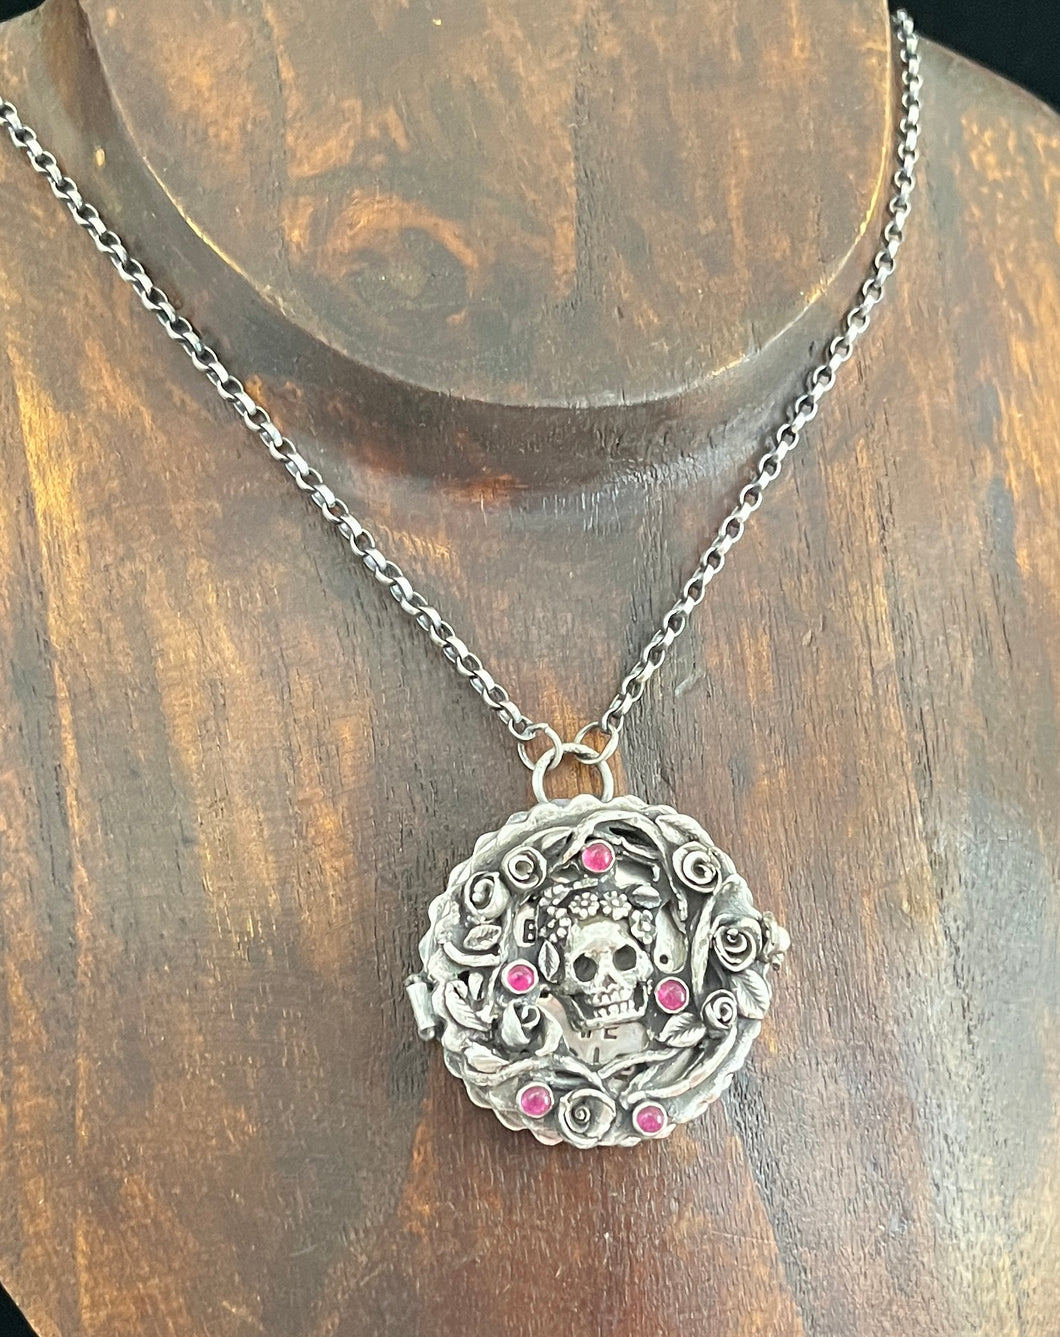 Duality pendant....  Tiny Rubies and a keepsake coin inside.  Sterling silver handmade.